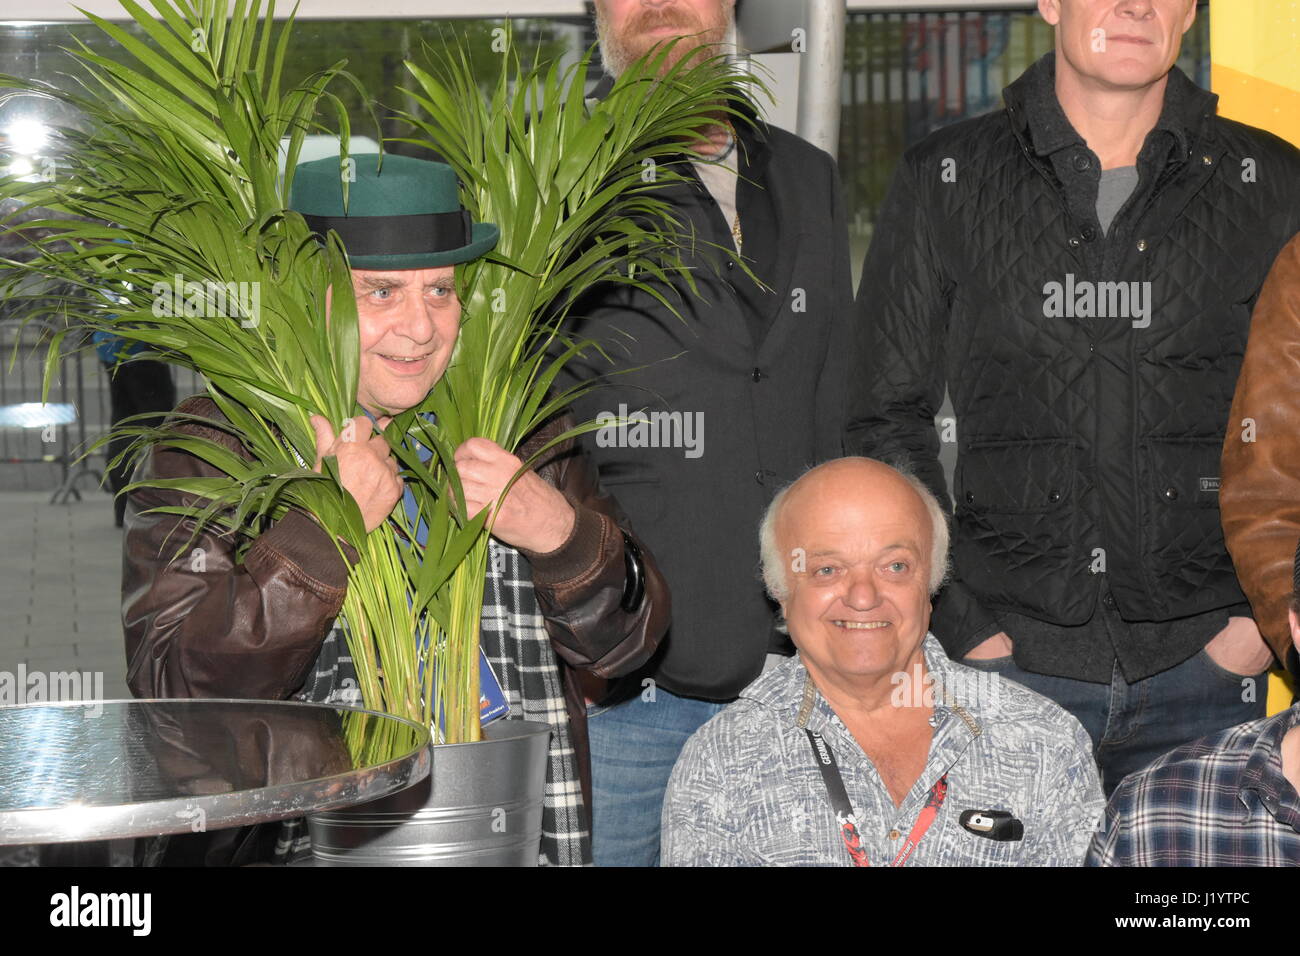 Frankfurt, Germany. 22nd April 2017. Sylvester McCoy (Doctor Who, The Hobbit), Rusty Goffe at the German Comic Con Frankfurt Credit: Markus Wissmann/Alamy Live News Stock Photo